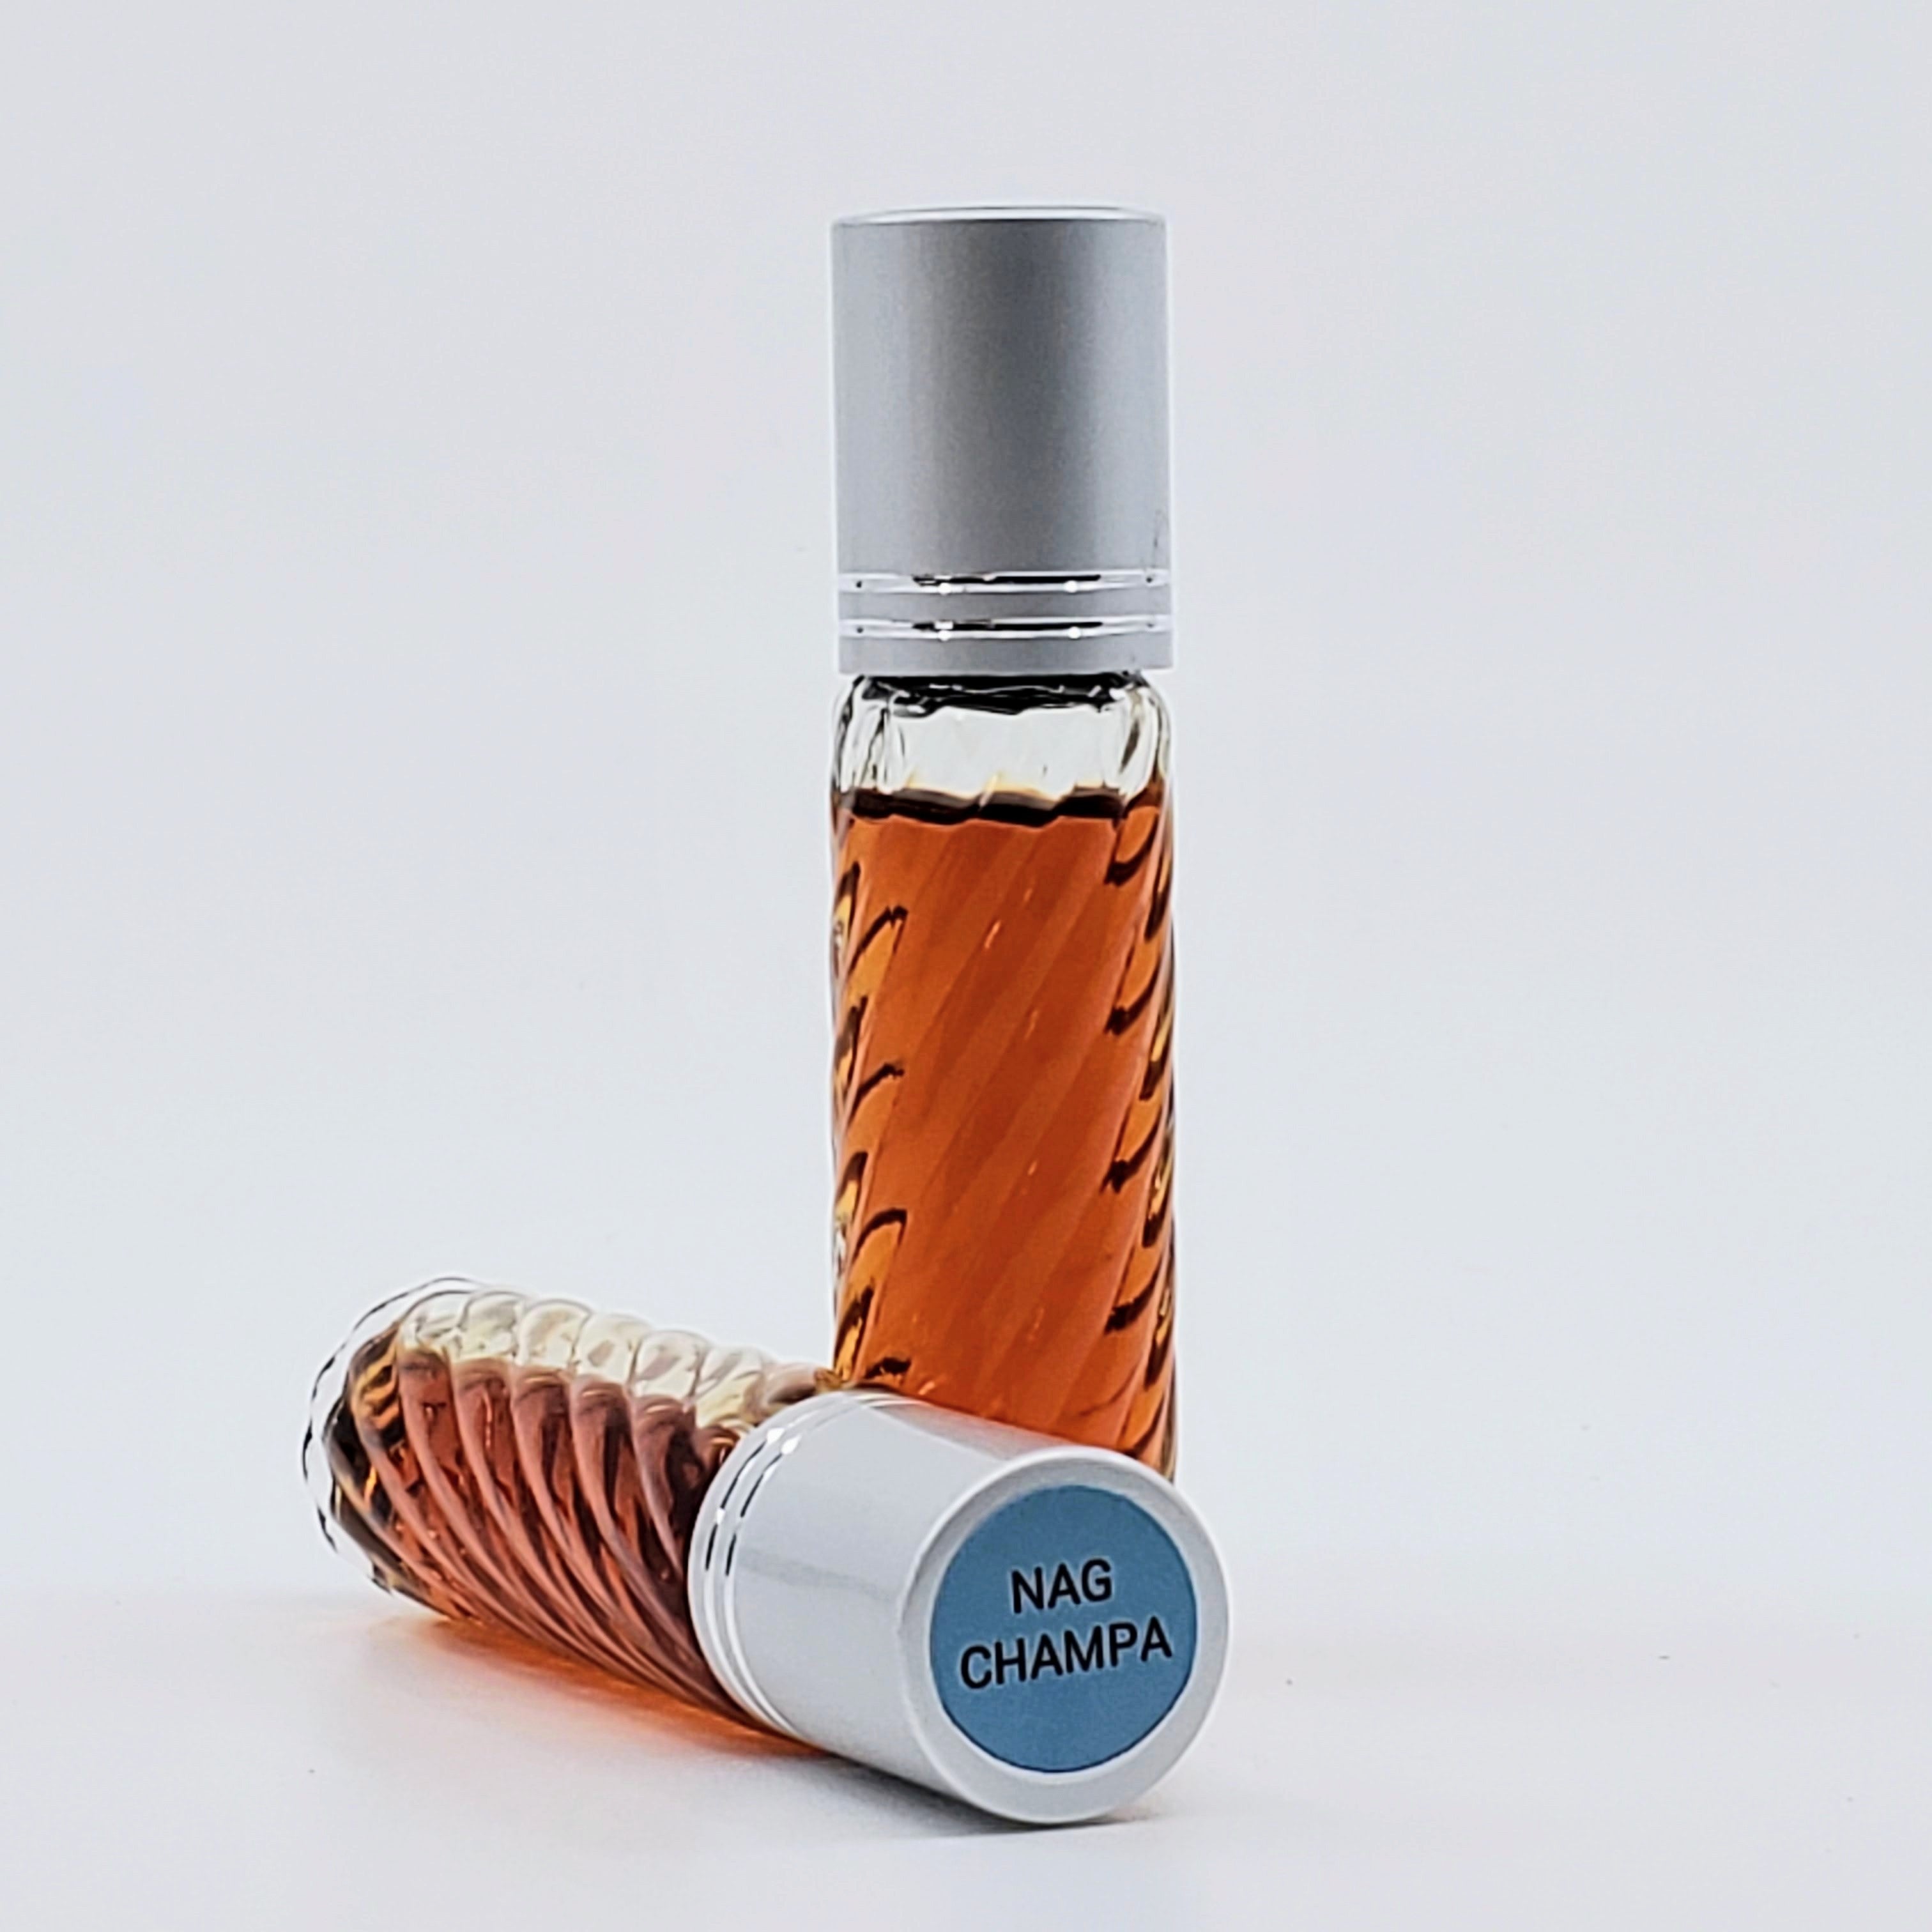 Nag Champa Roll On Perfume Oil : 1.3oz – Lolablue Living